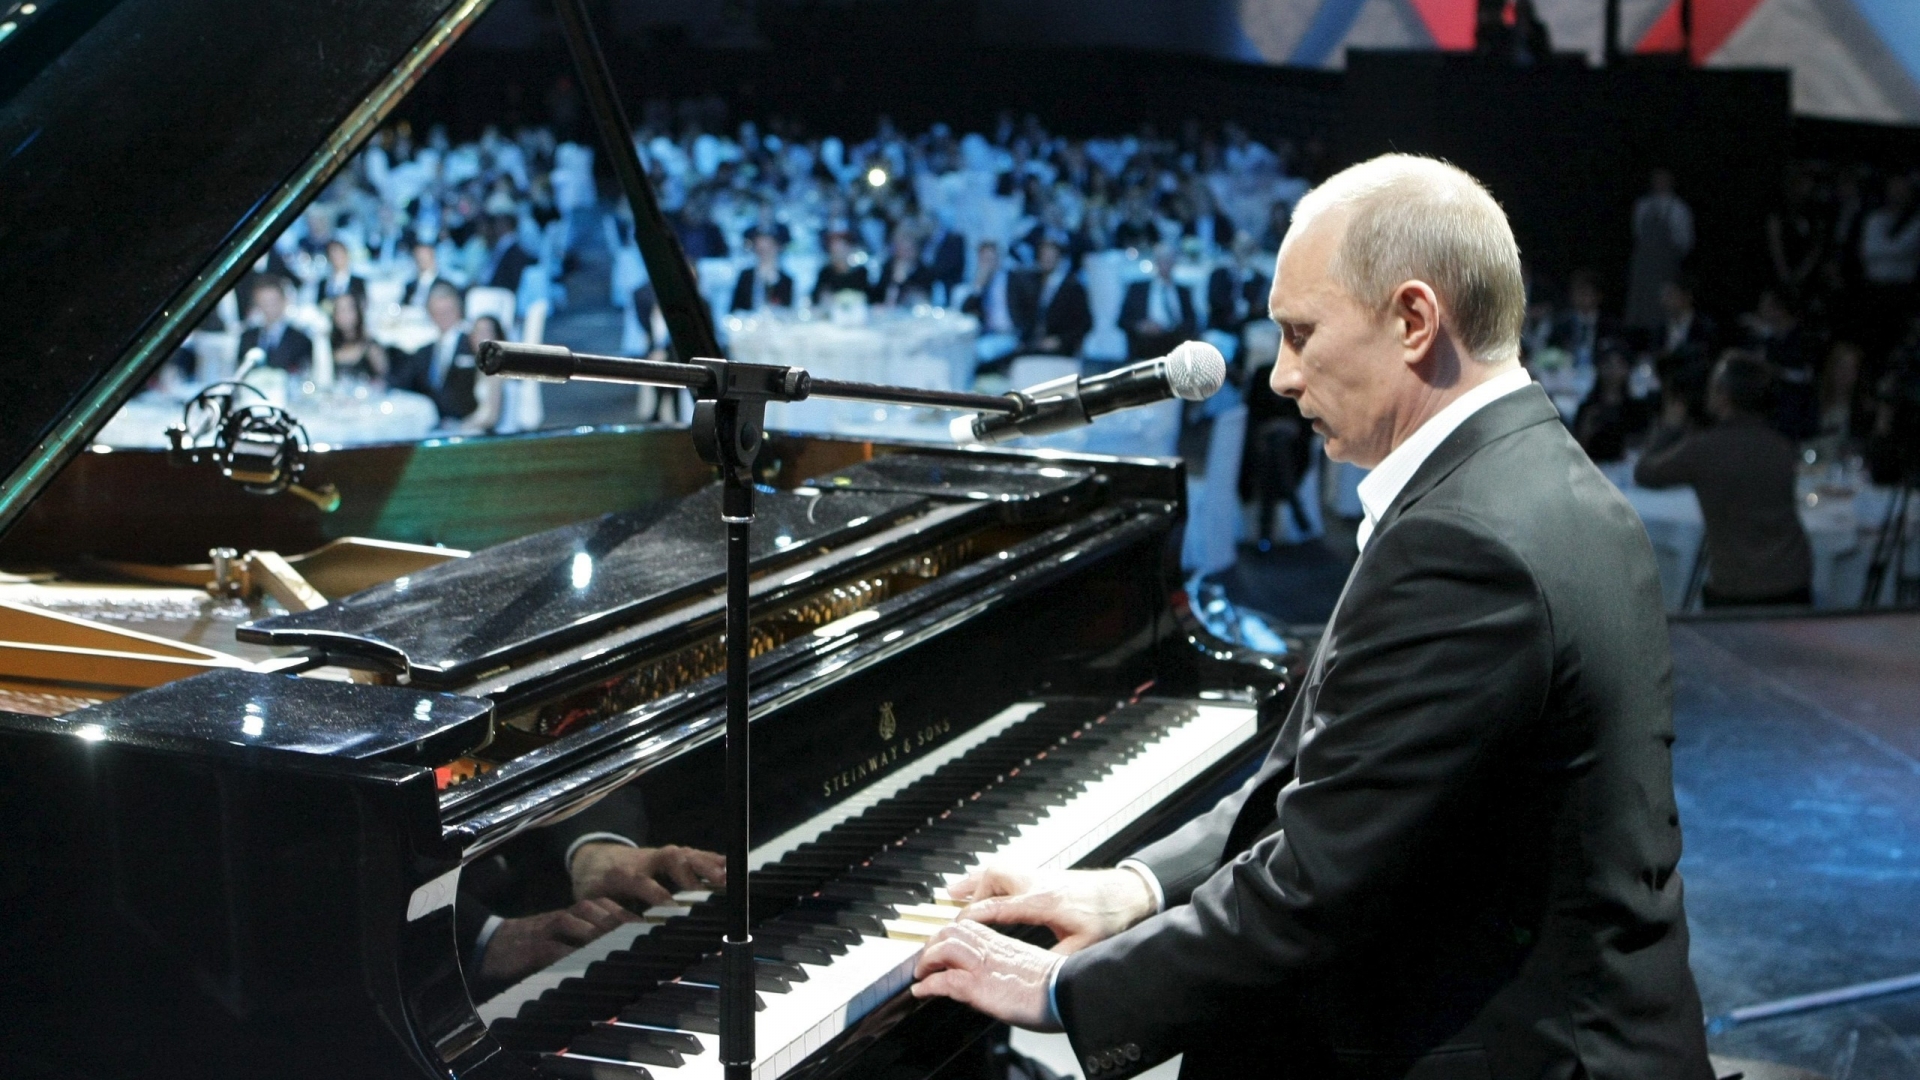 Vladimir Putin Playing Piano for 1920 x 1080 HDTV 1080p resolution